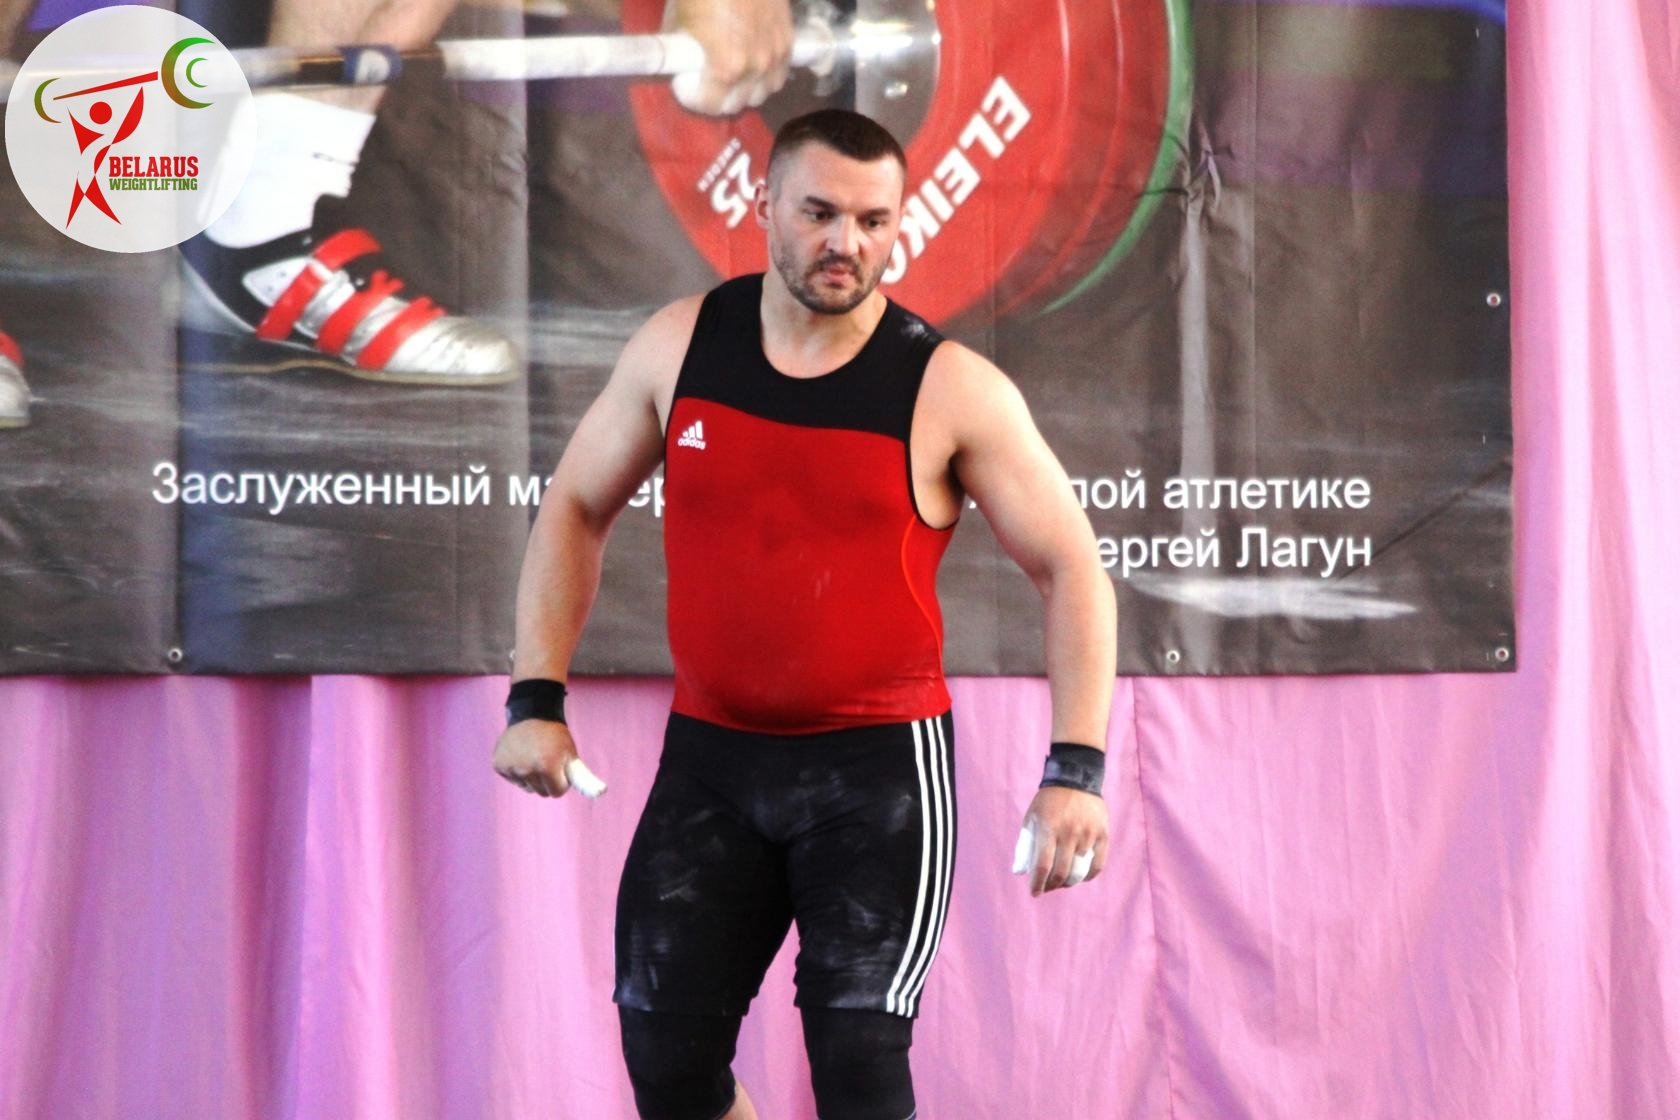 Vadim Streltsov